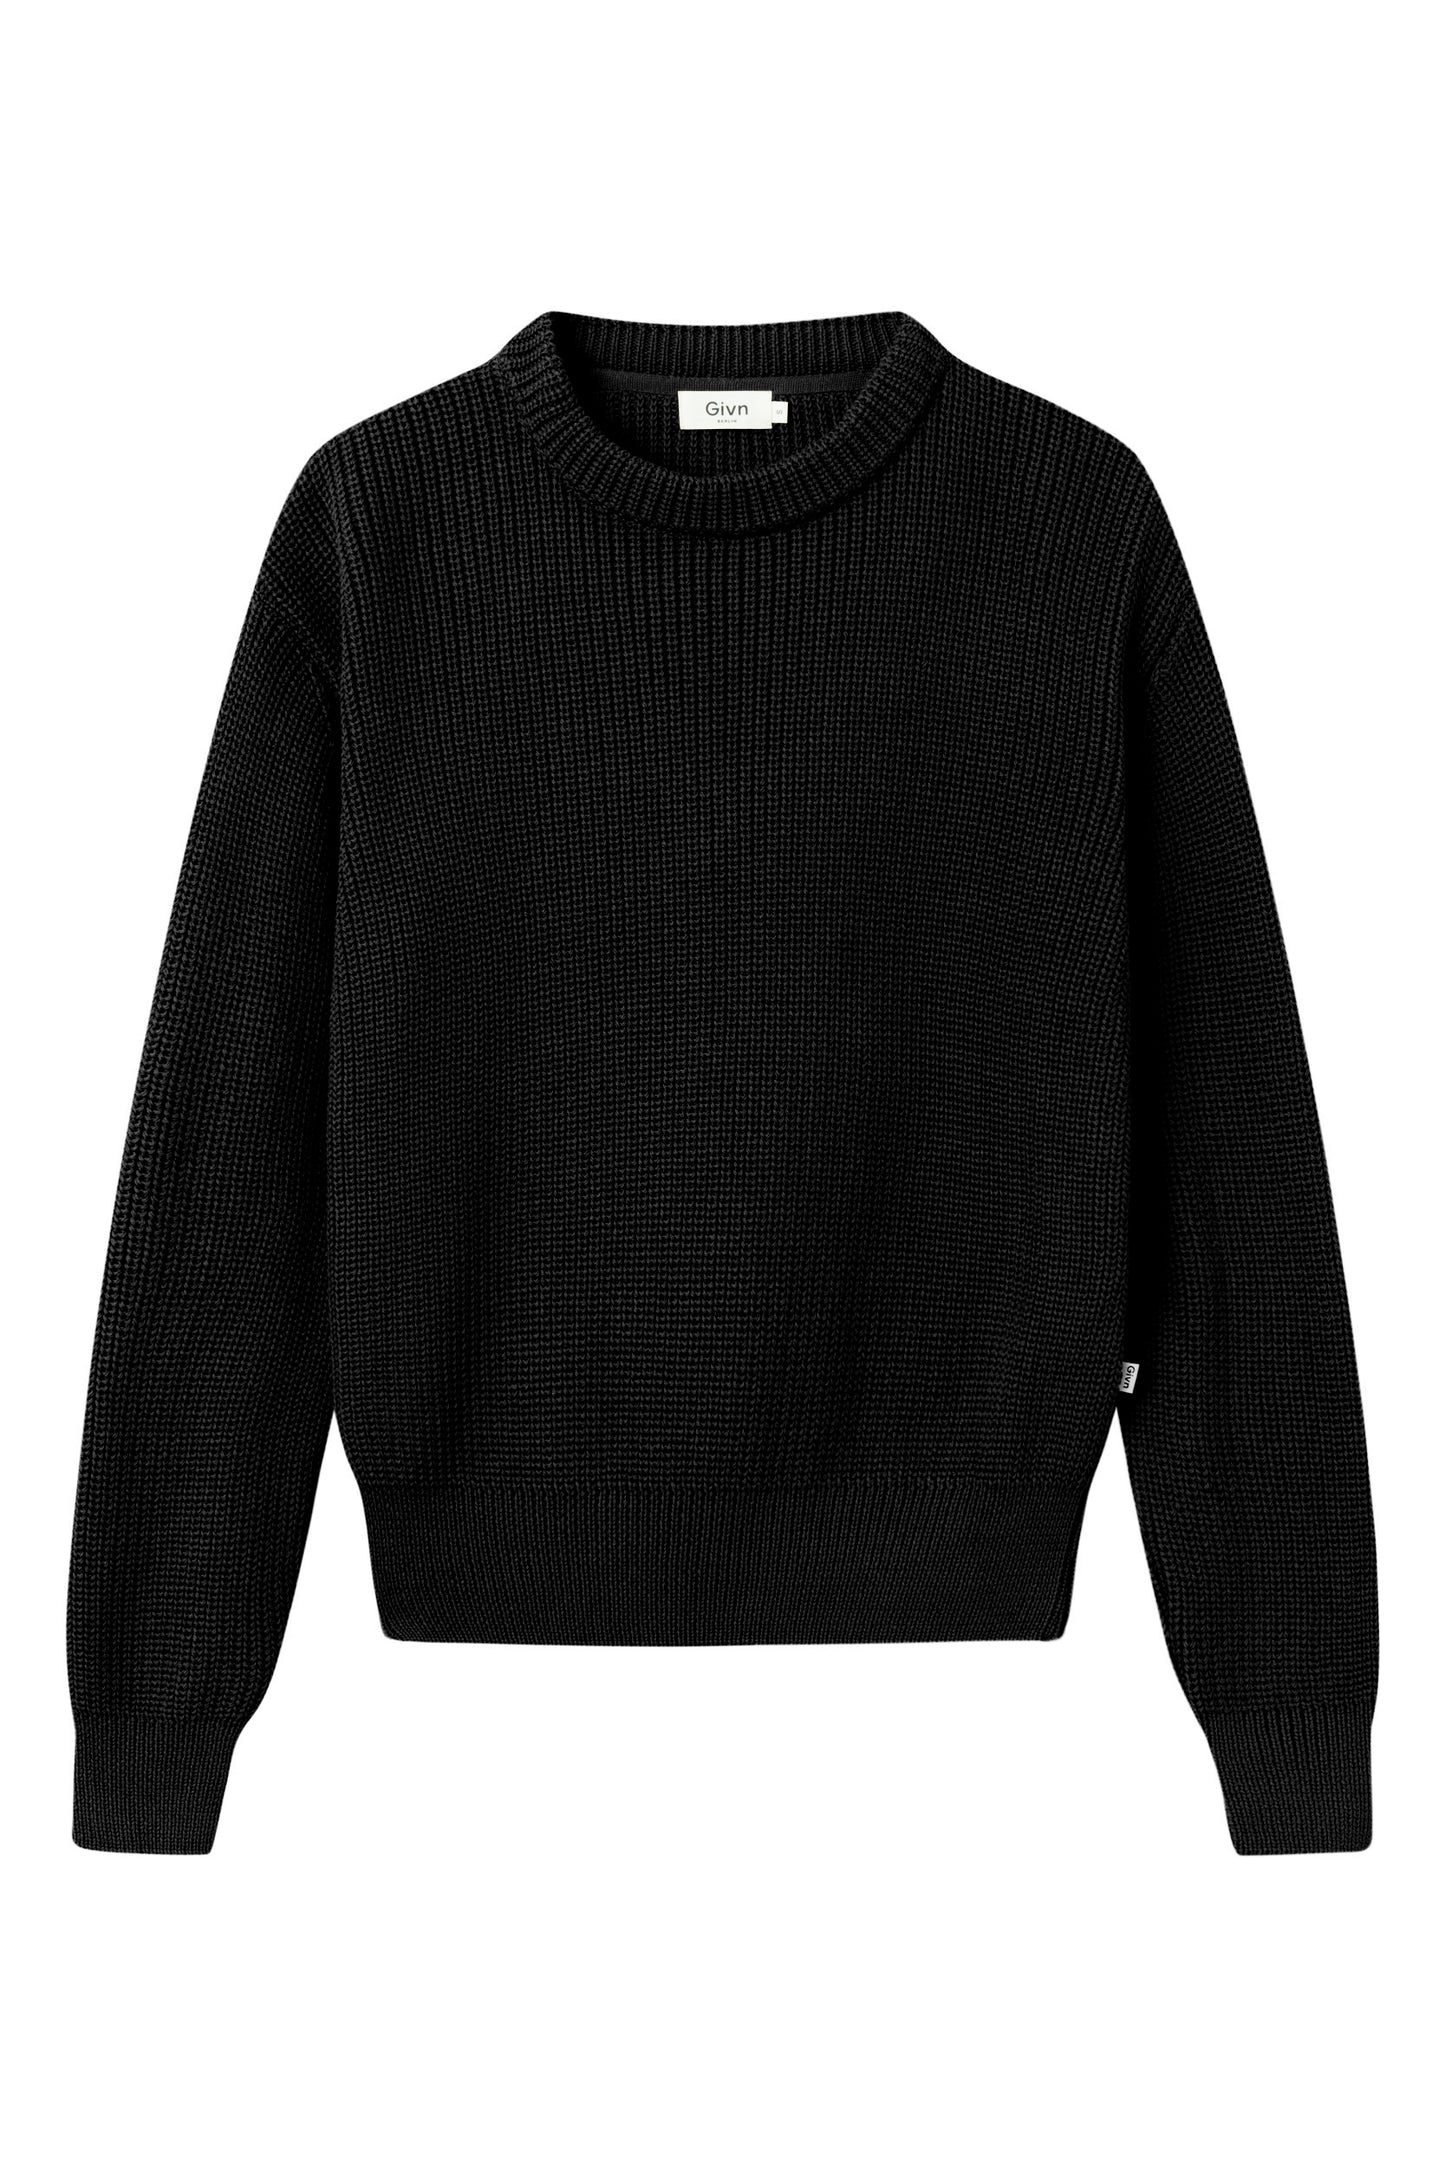 Givn - Aria Sweater Black